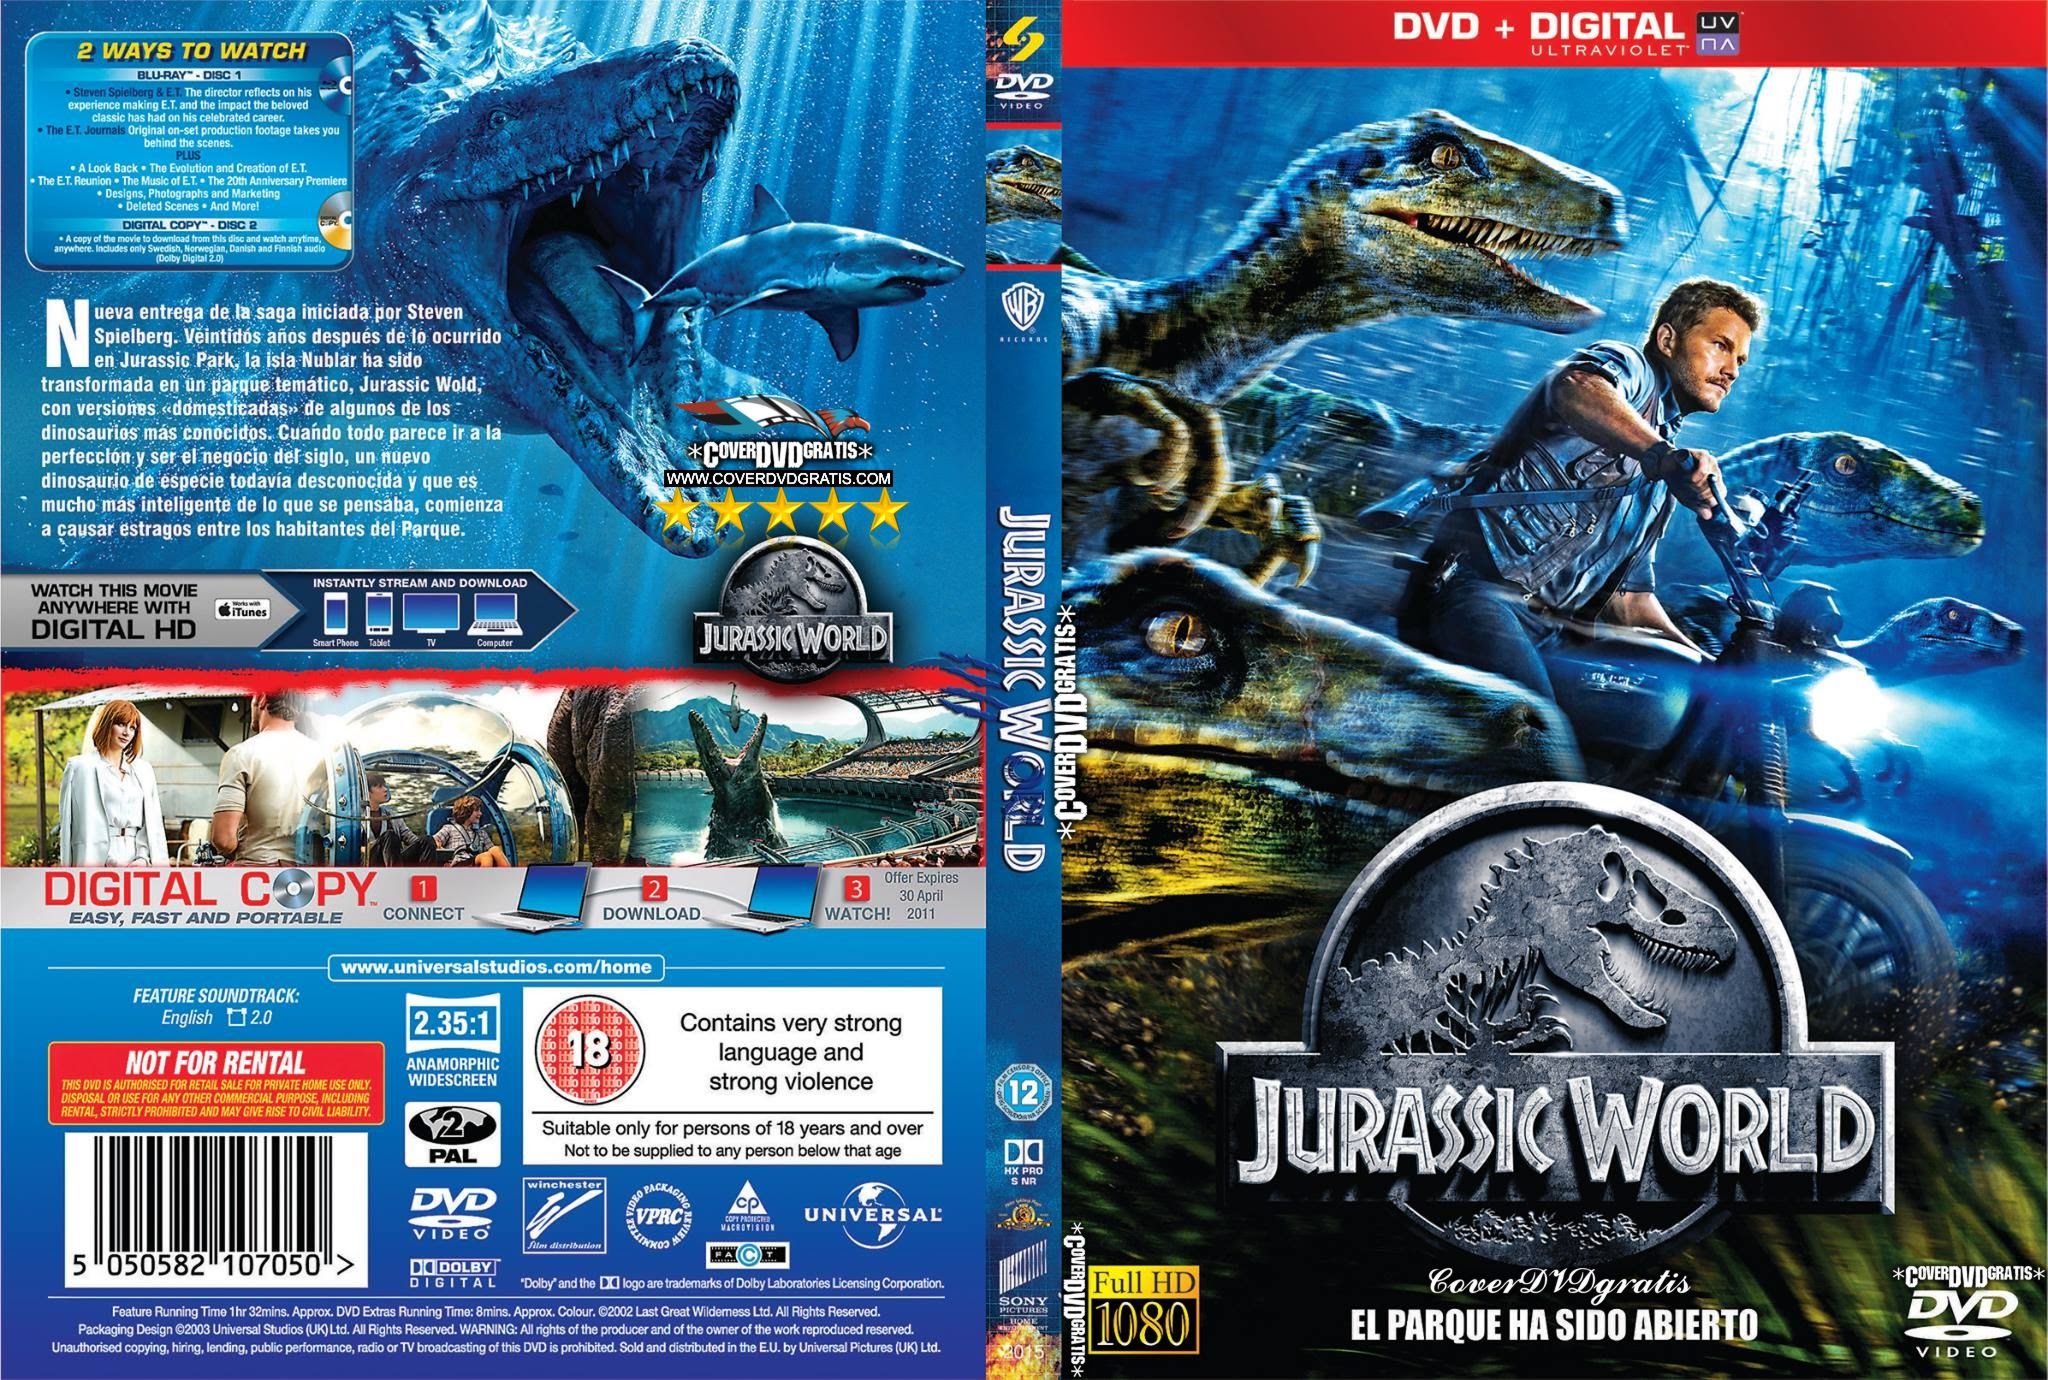 Jurassic World 2015 cover.